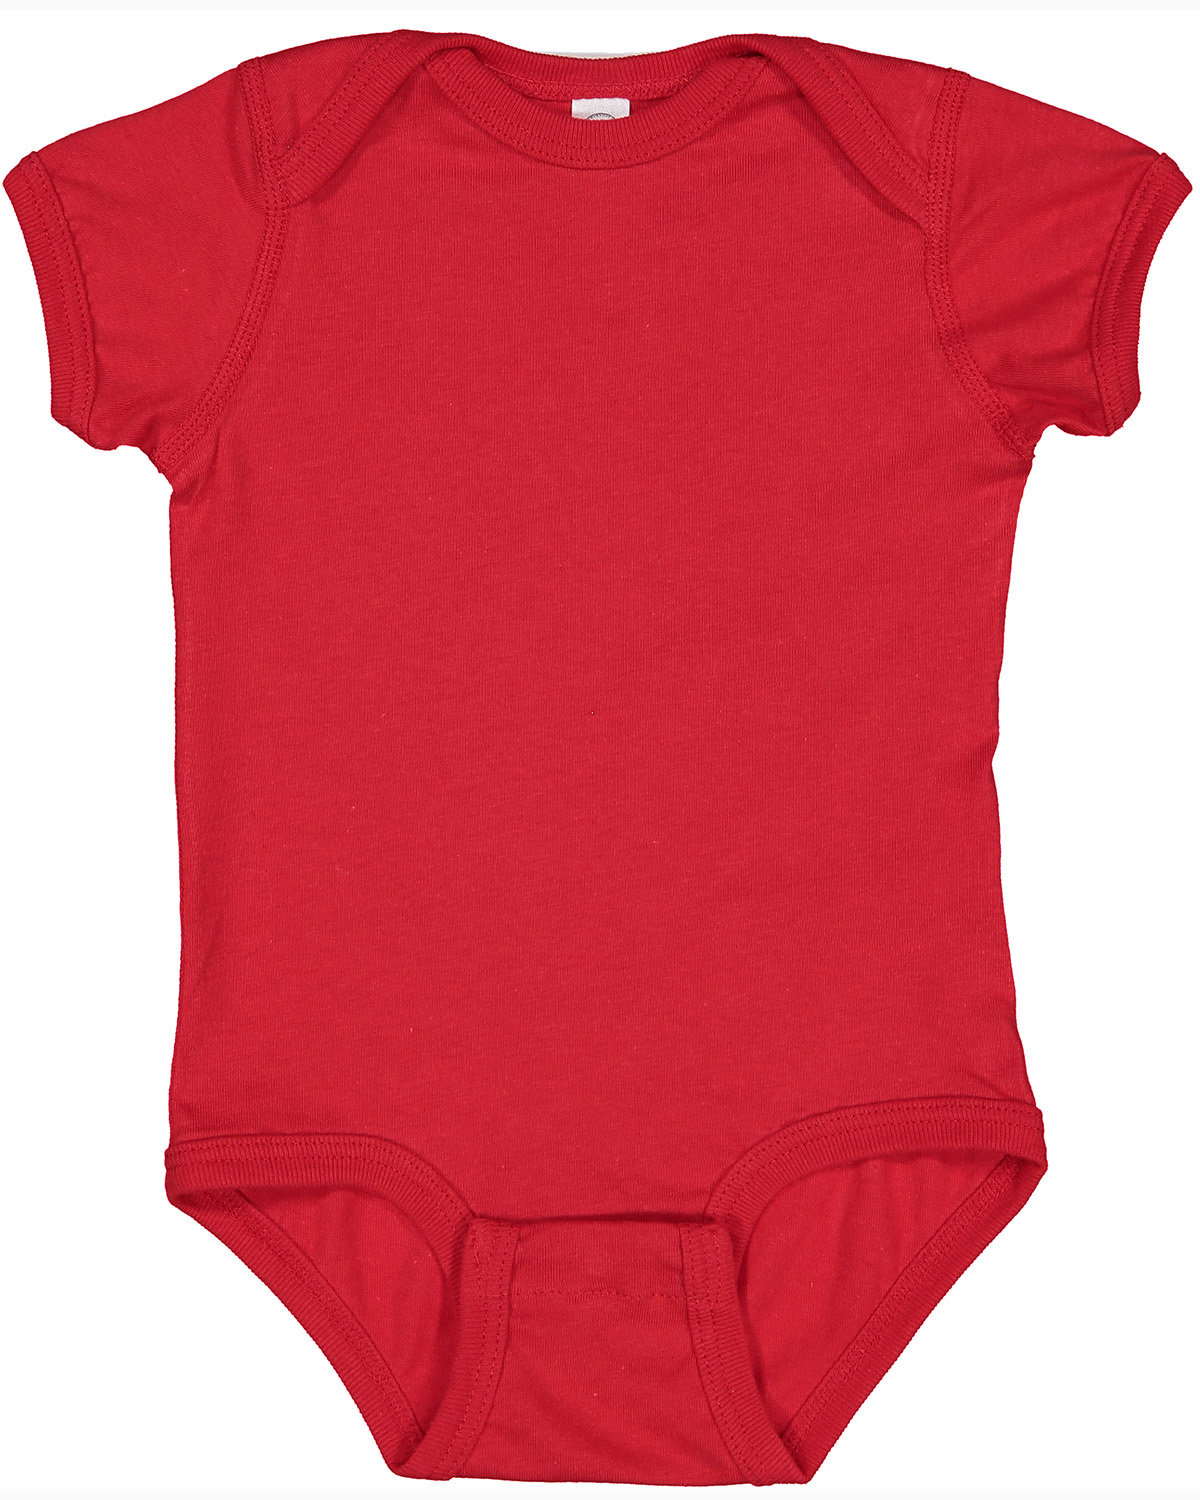 Rabbit Skins Infant Fine Jersey Bodysuit RED 